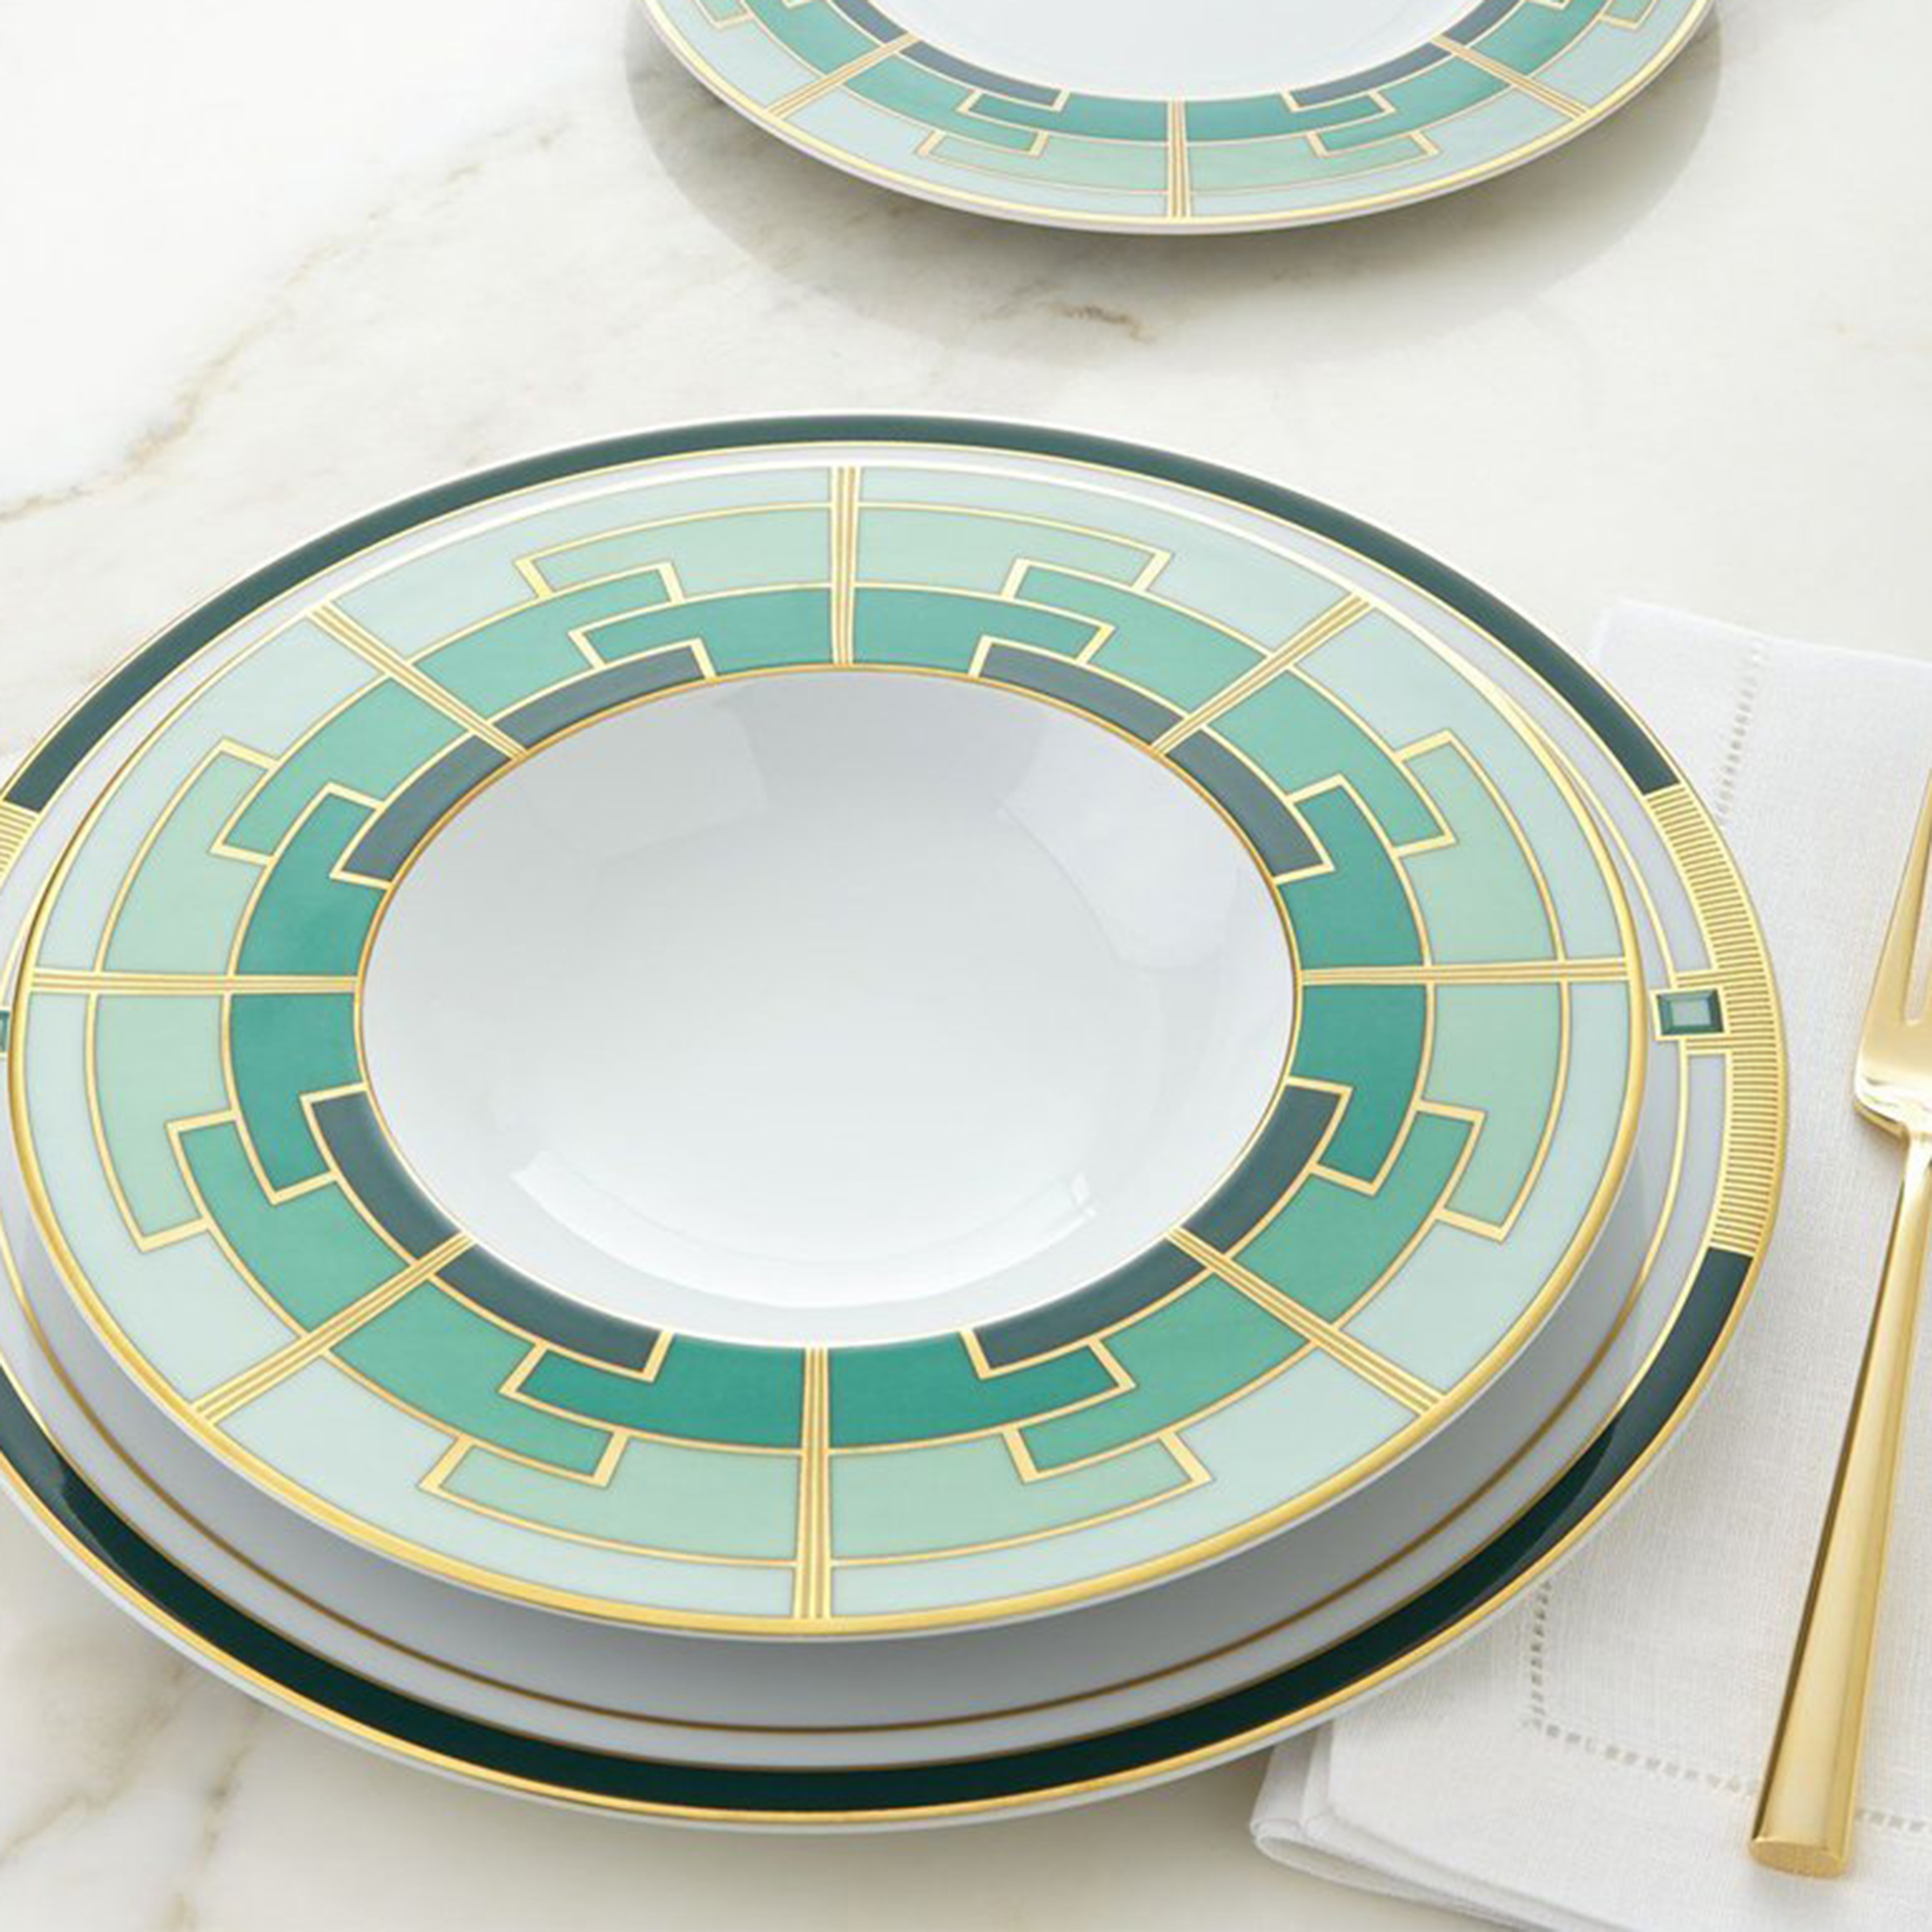 Flat plate. Vista Alegre посуда Emerald. Plate Vista Alegre. Vista тарелки. Тарелки Vista Alegre Portugal зеленые.